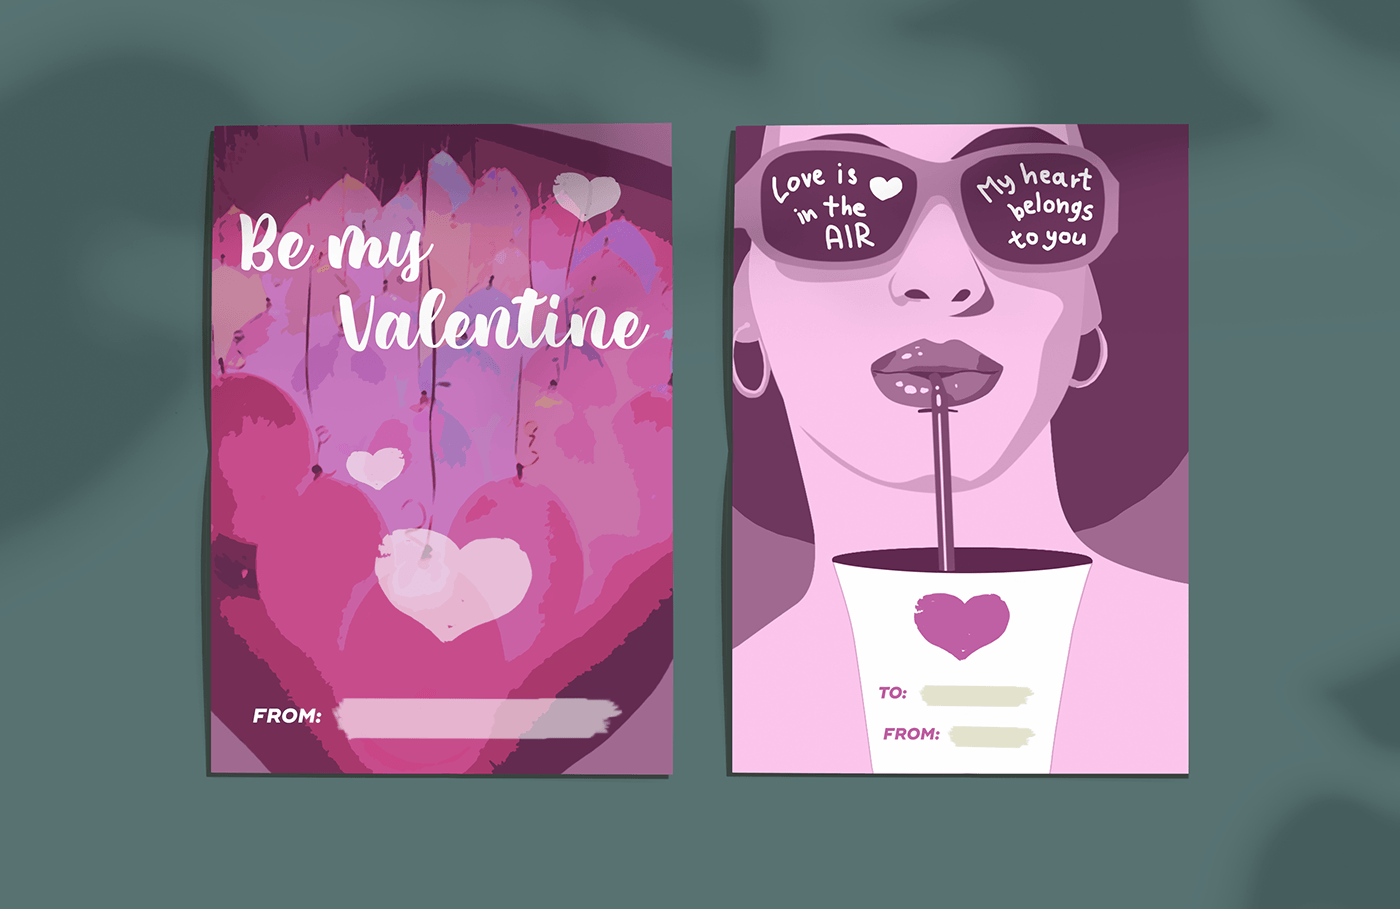 Valentine's Day valentine card cards Cards design graphic design  print design  Valentine's prints